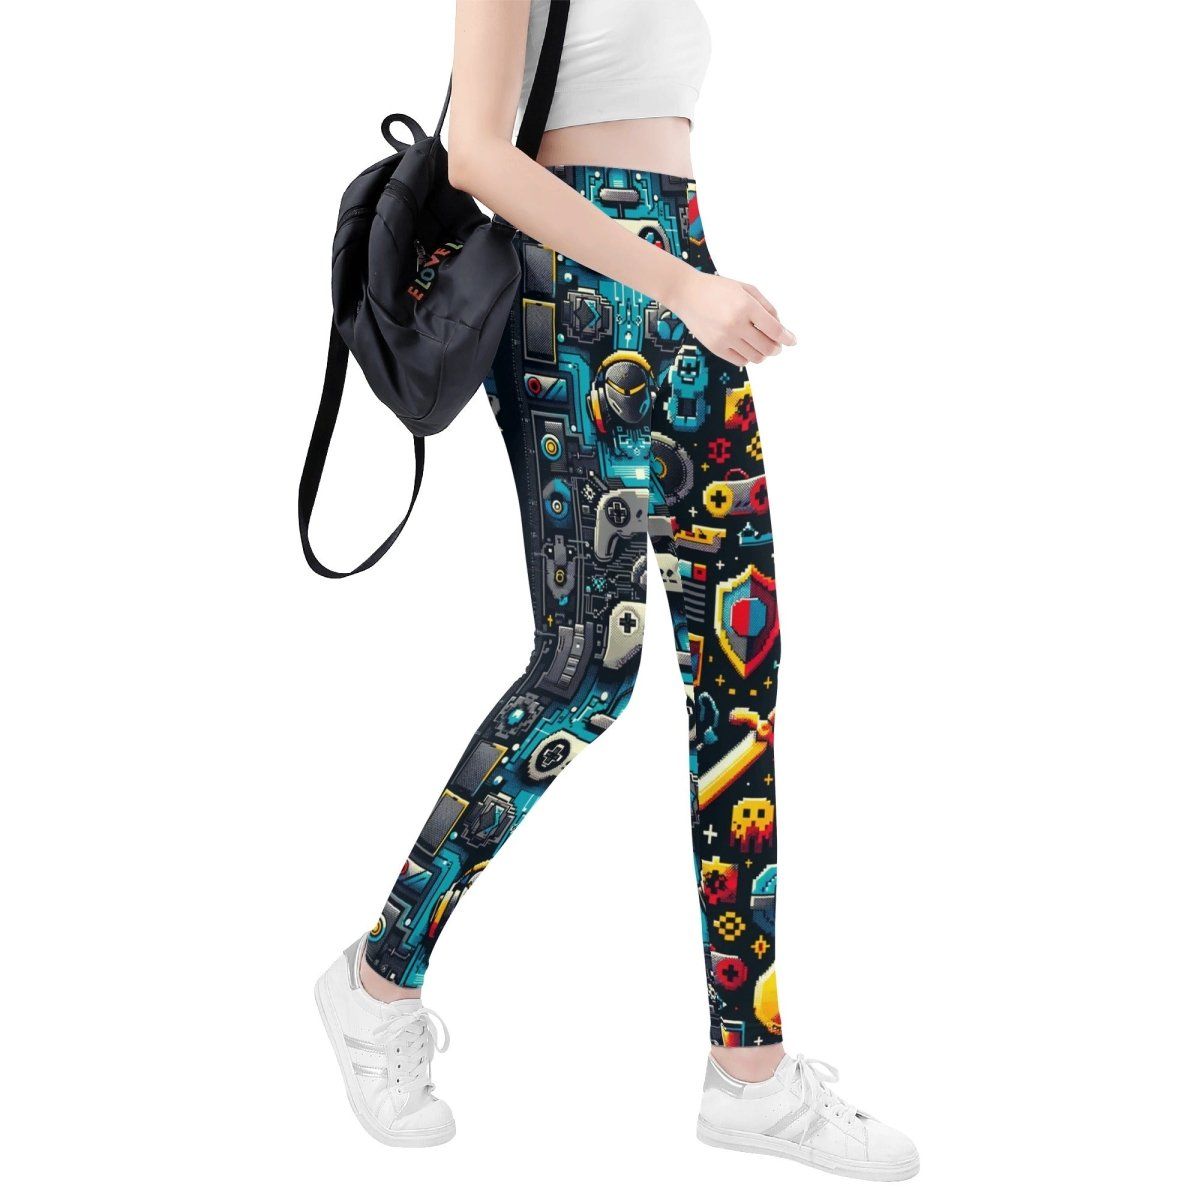 Soft Womens Gaming Leggings - Sleek Chic Spandex Yoga Pants for Every Move - Iron Phoenix GHG